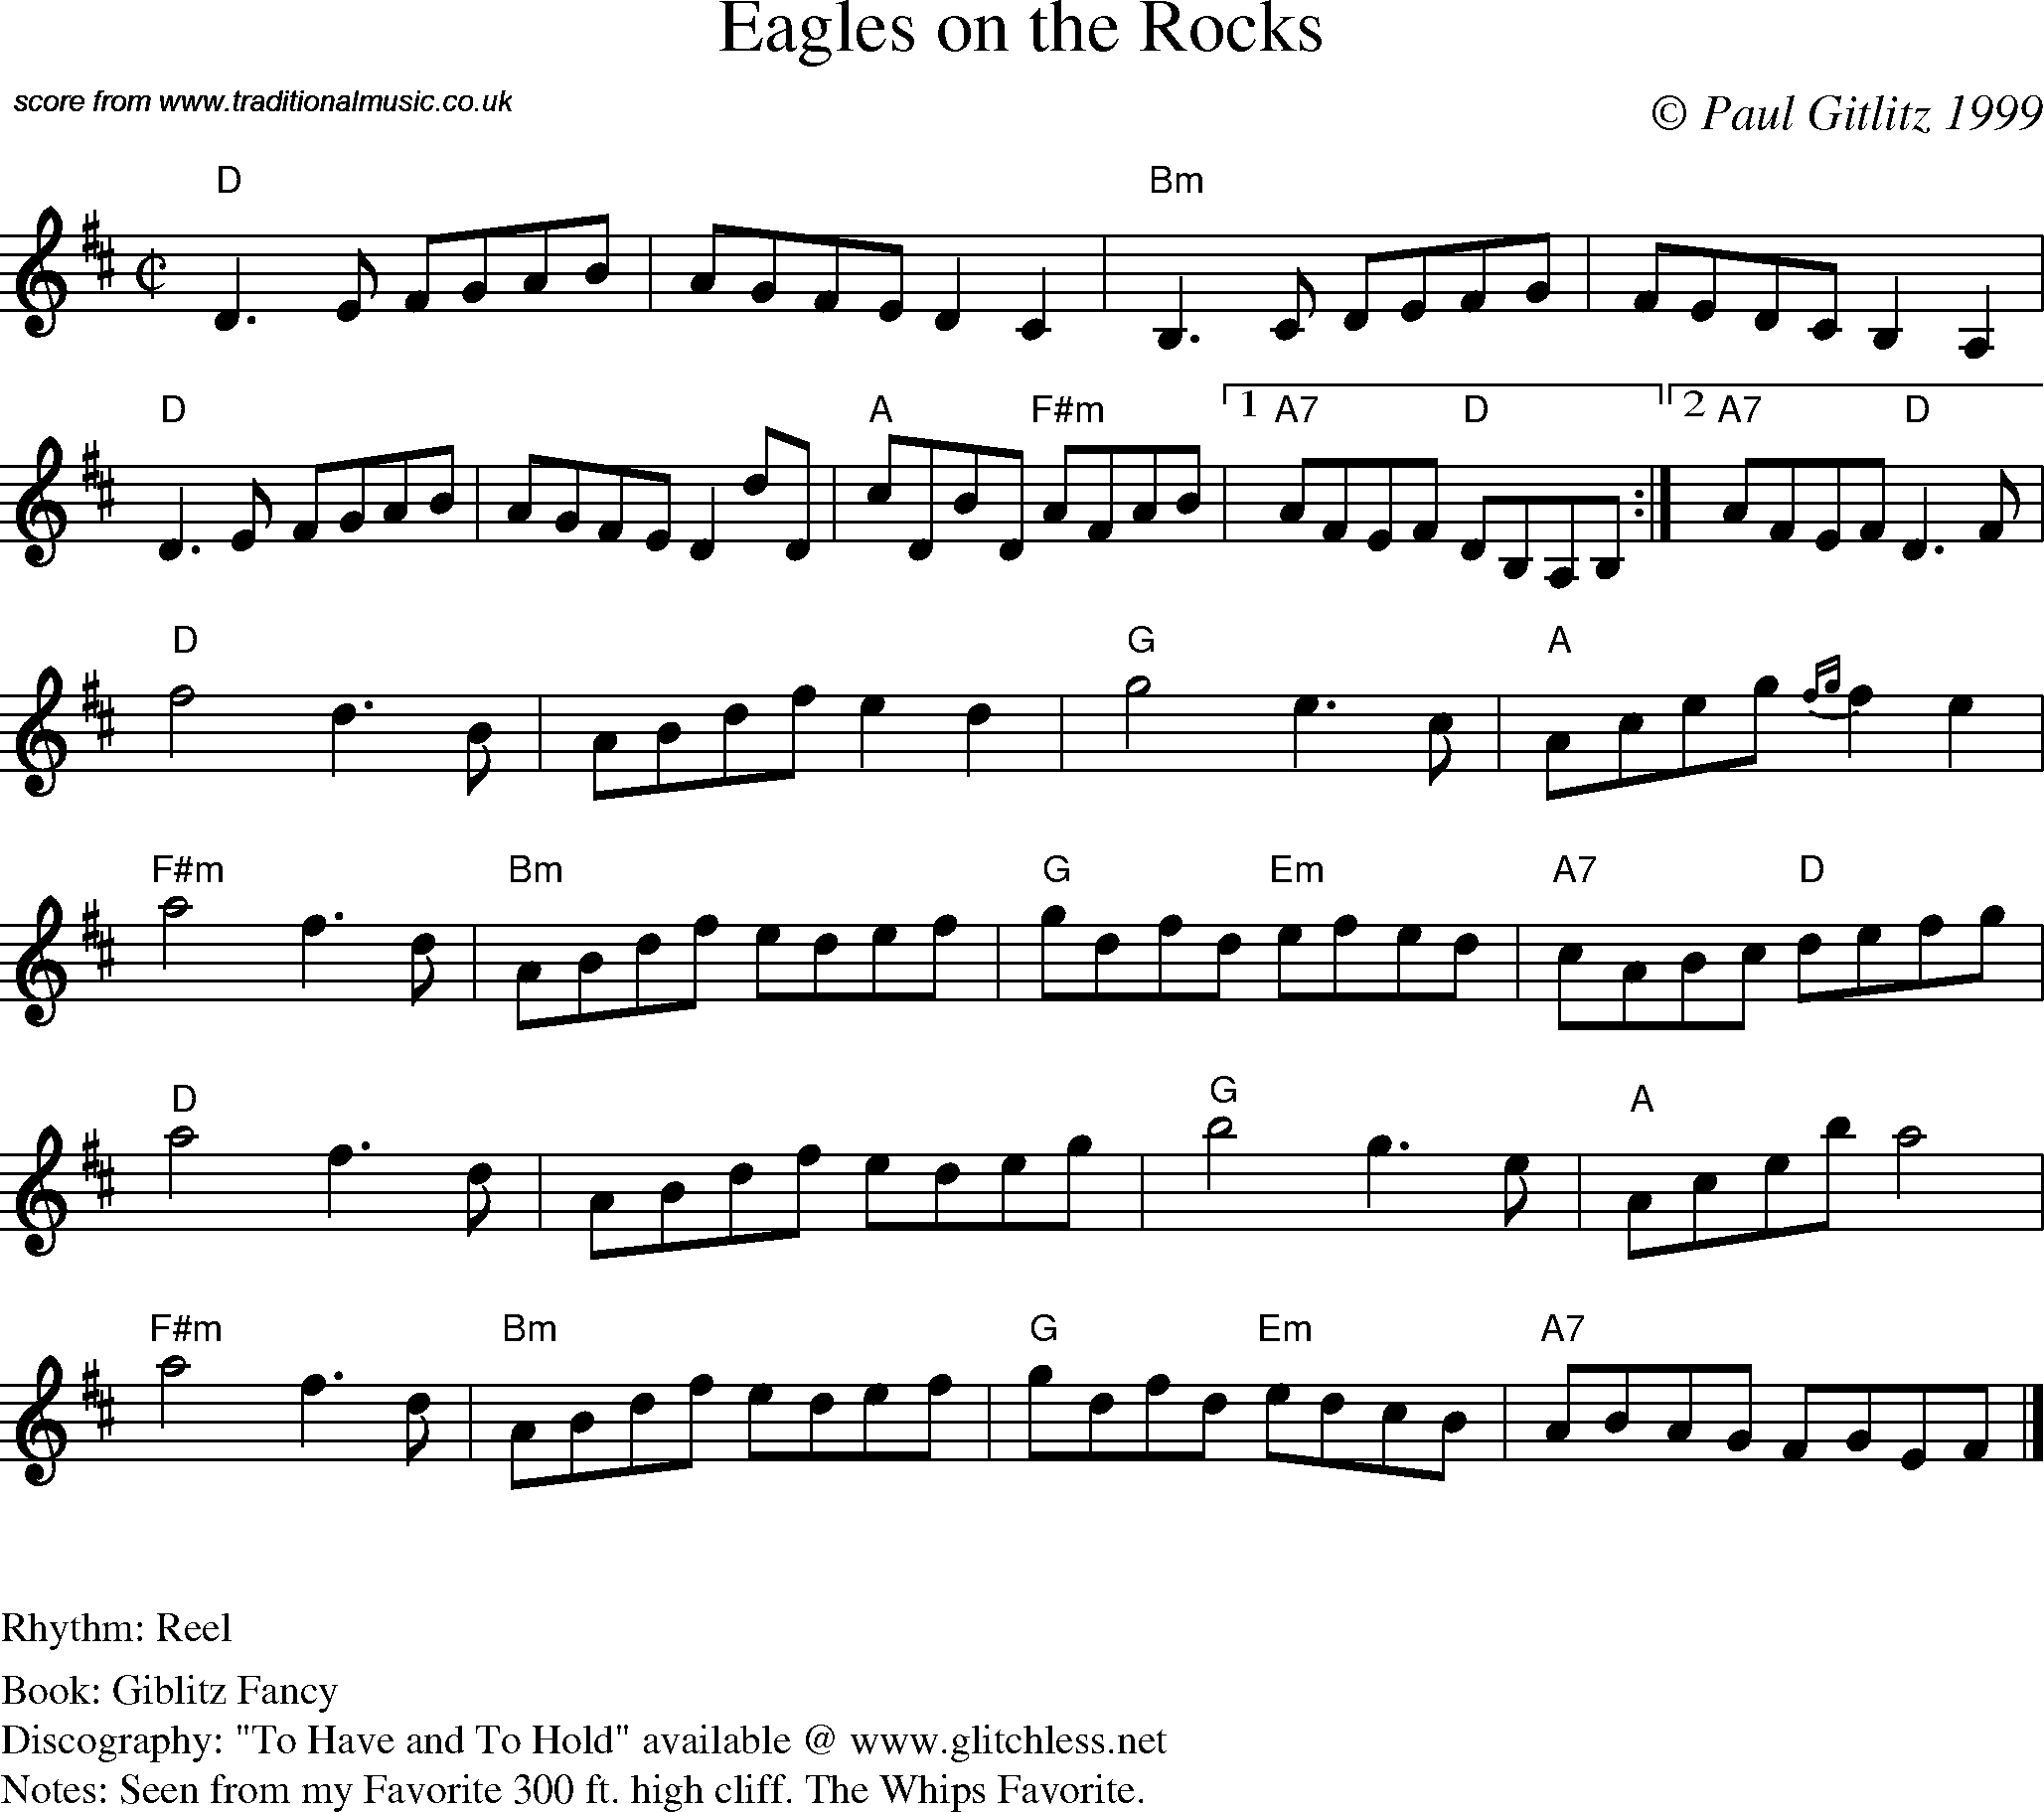 Sheet Music Score for Reel - Eagles on the Rocks